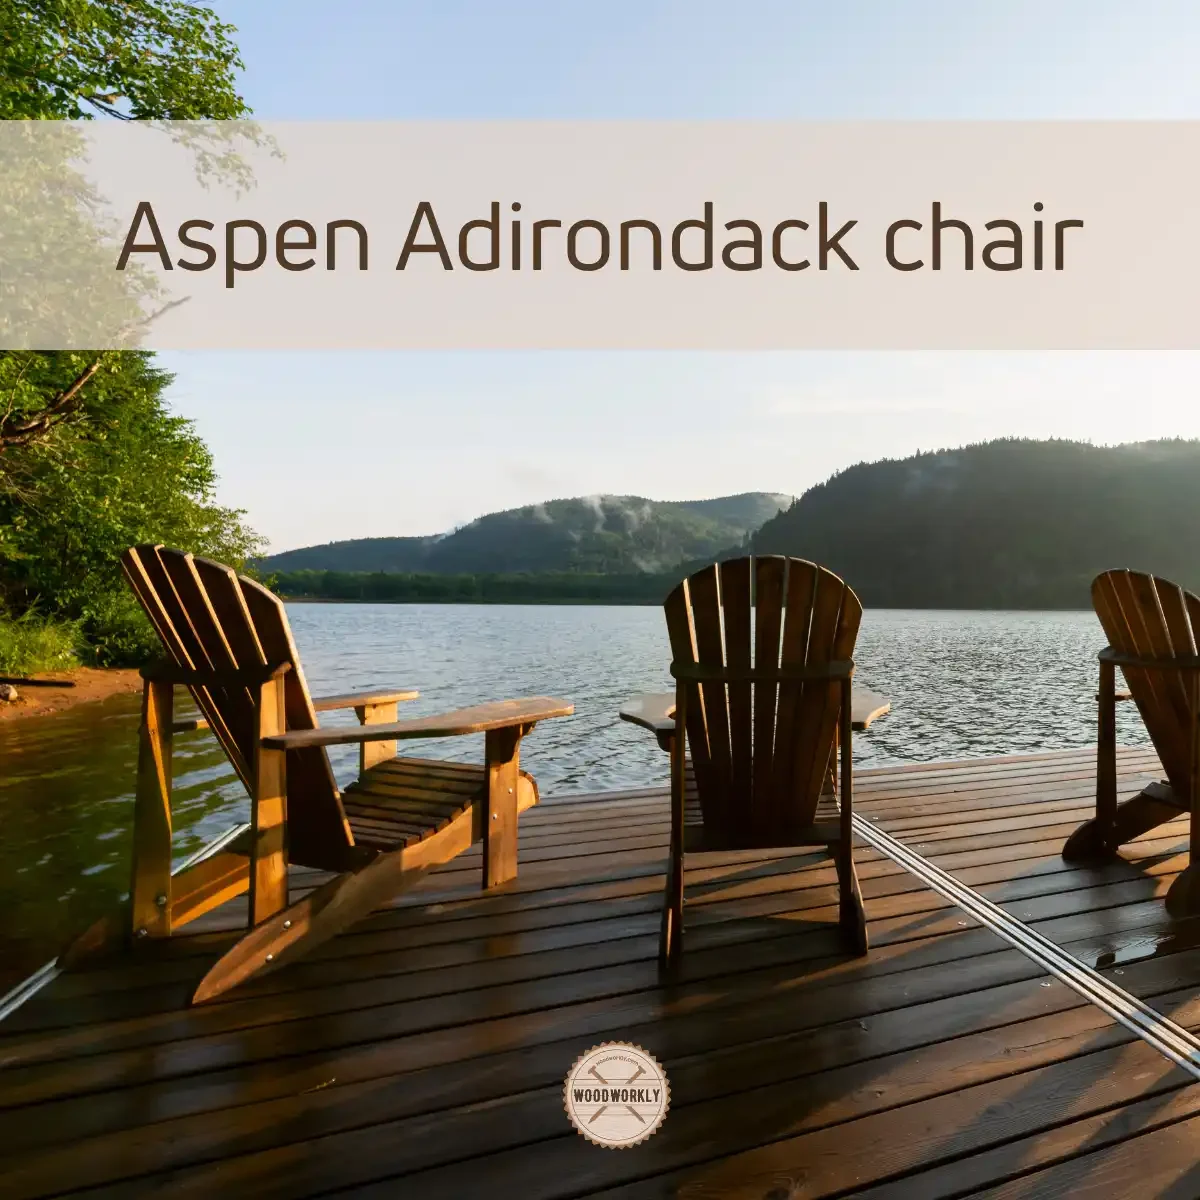 Aspen Adirondack chair